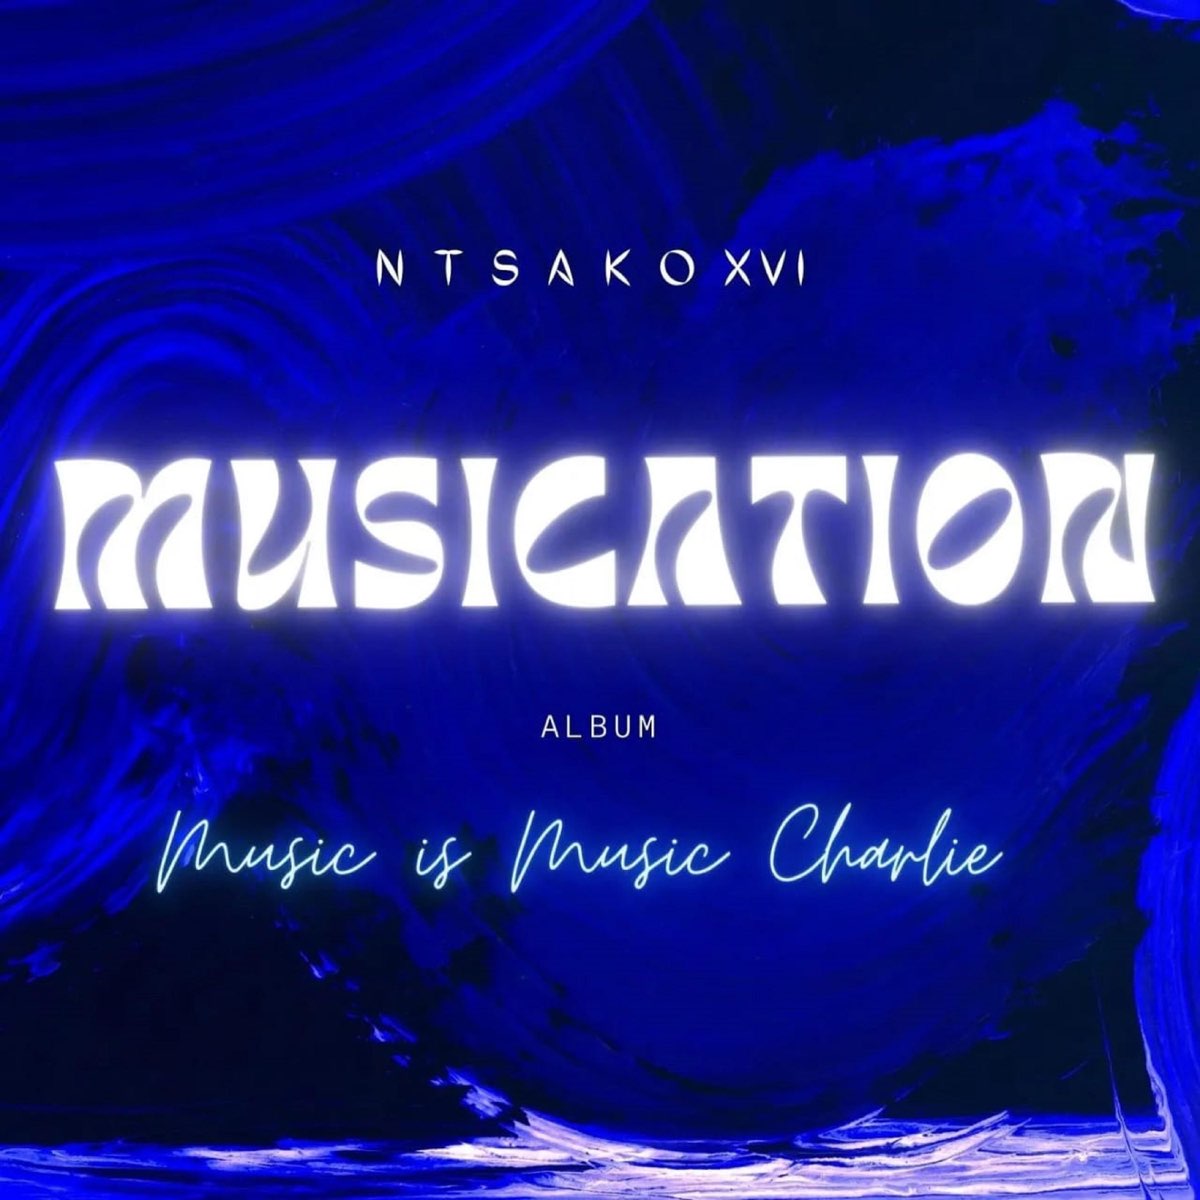 Musication by N T S A K O XVI | Album